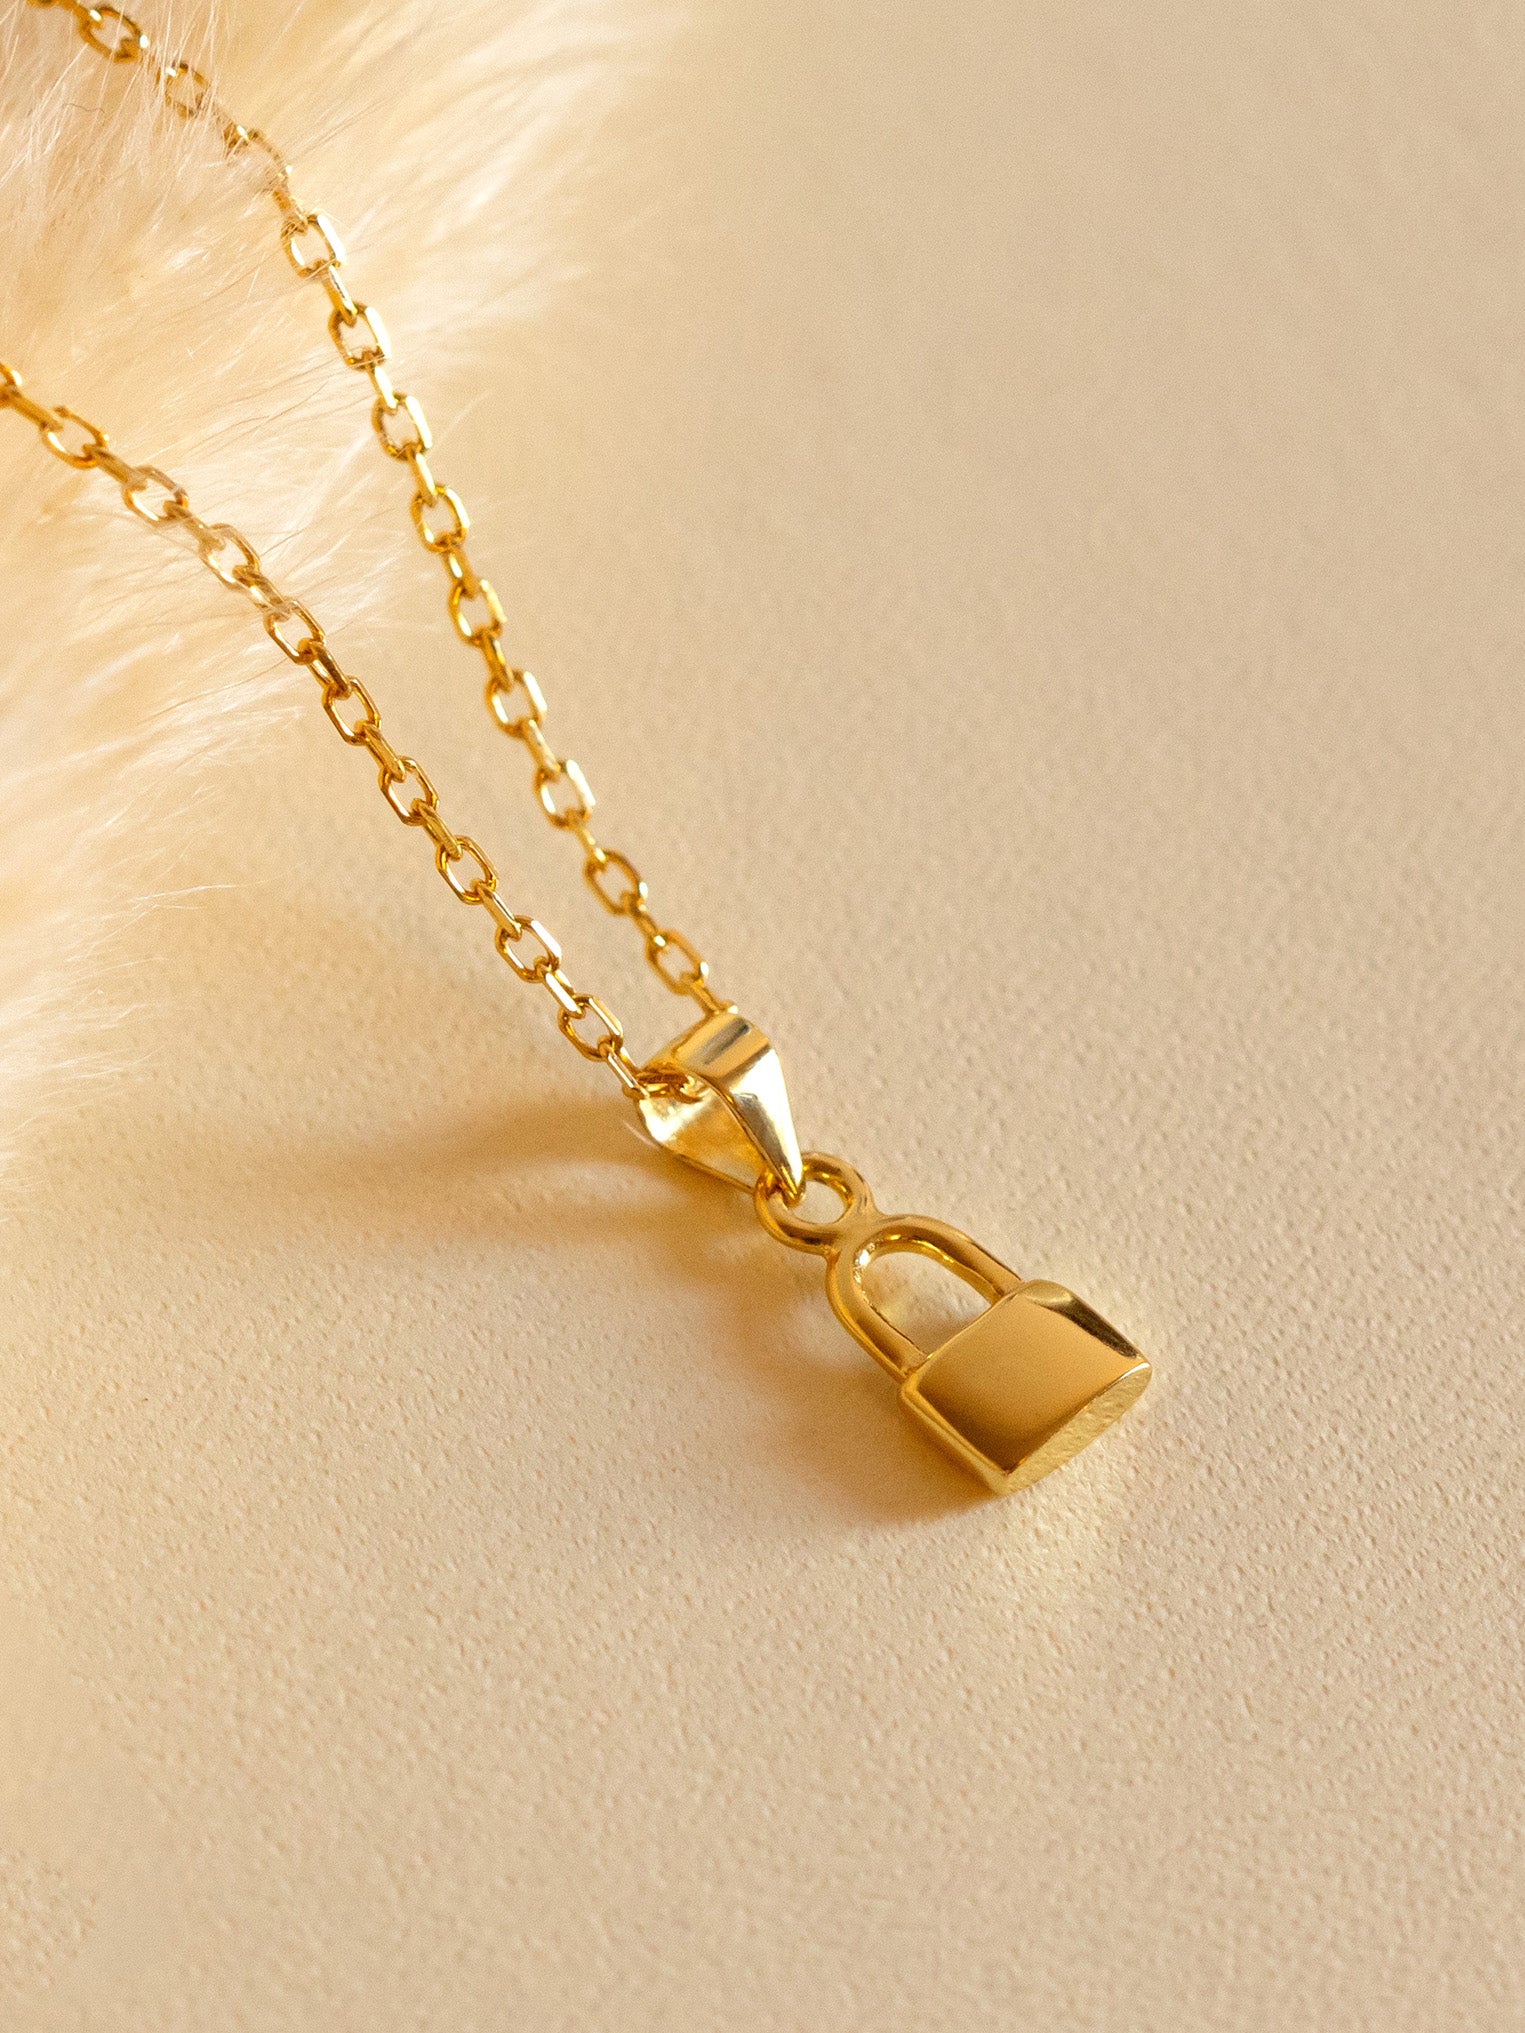 Gold Padlock Pendant Necklace / Choker - Adjustable Length